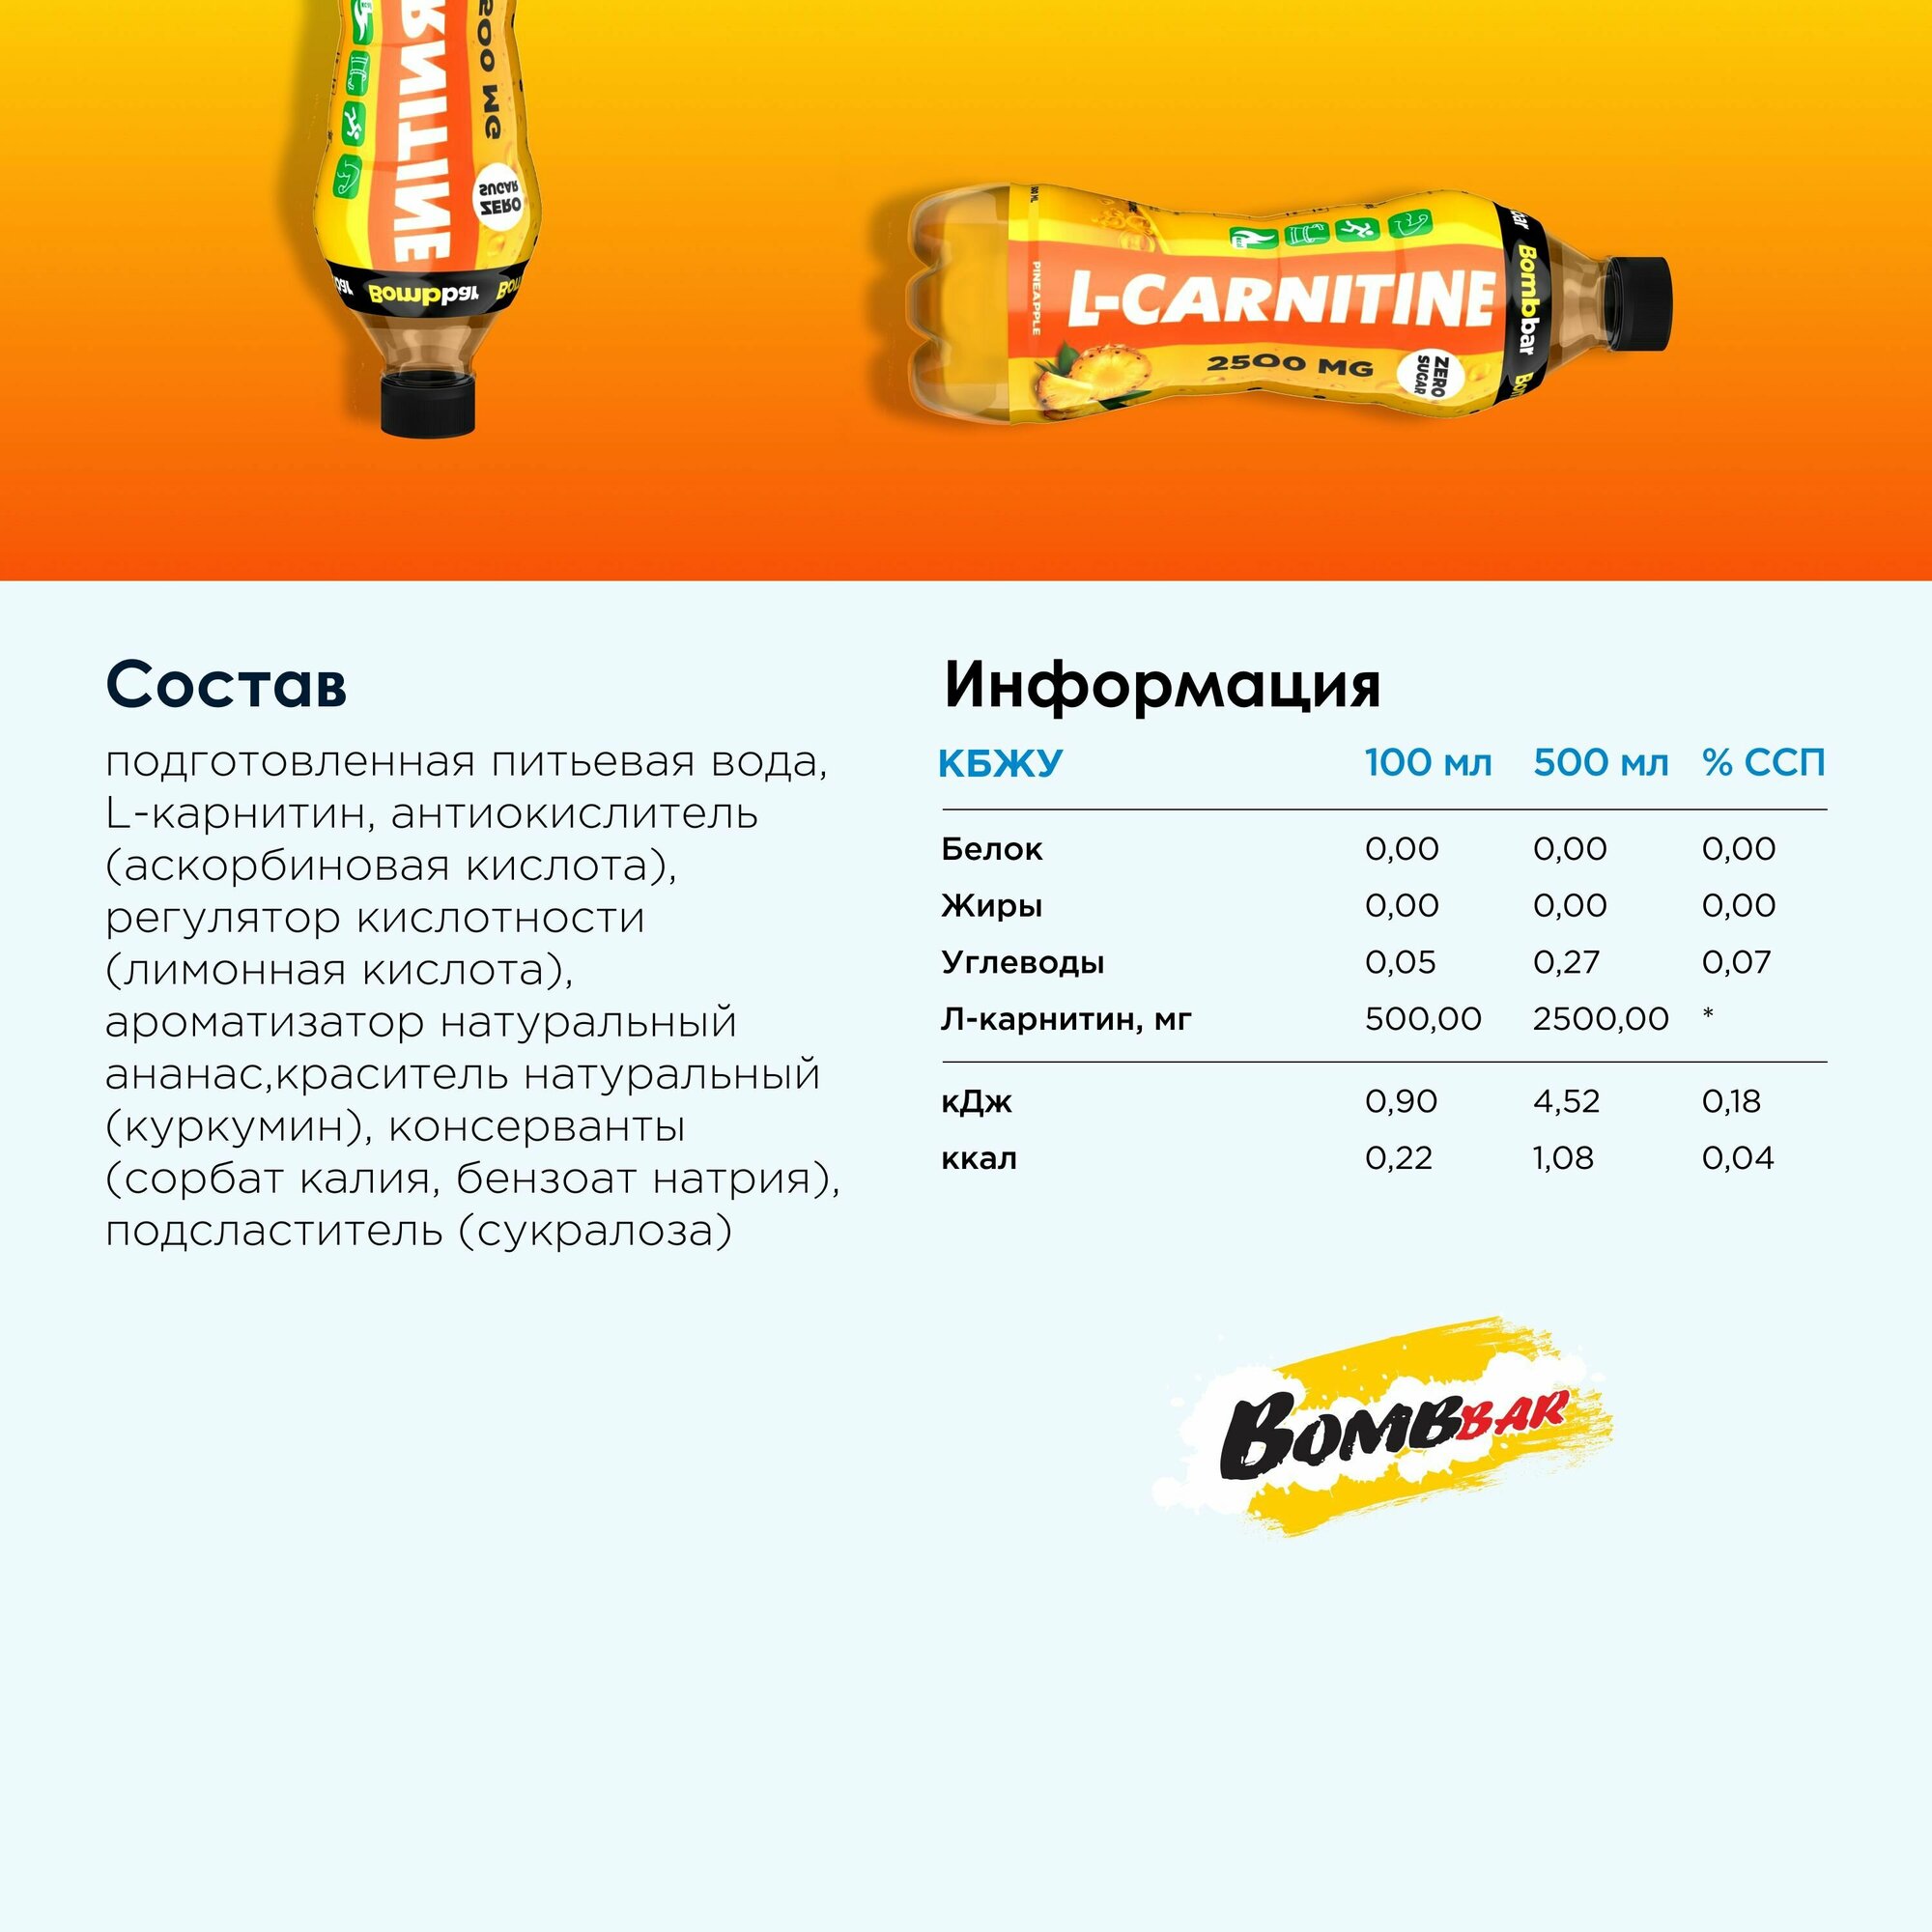 Bombbar Напиток L-карнитин без сахара 2500 мг "Ассорти", 500 мл x 6 шт